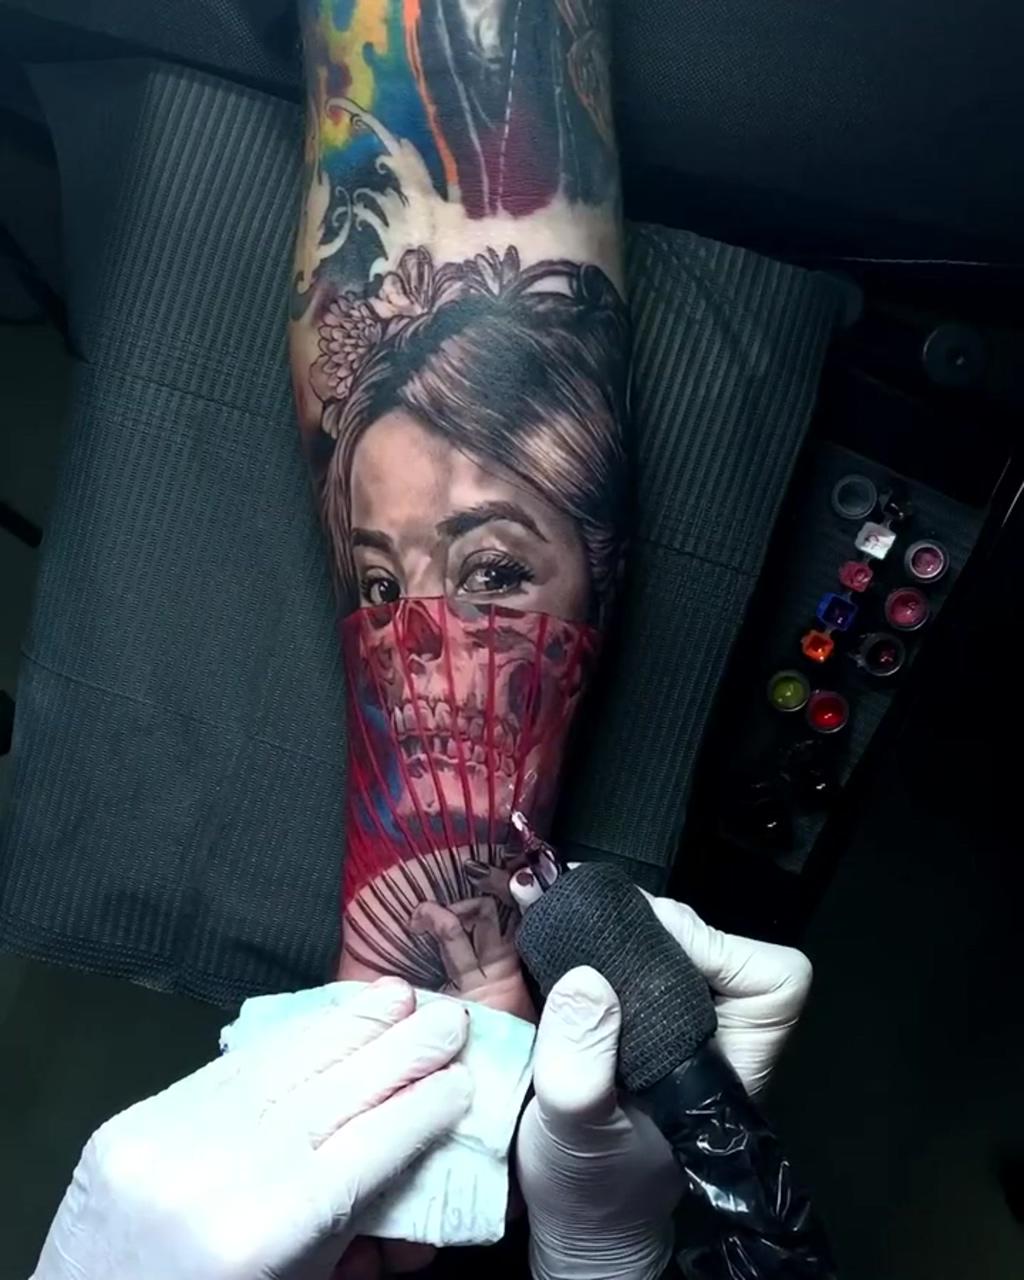 Skull tattoos o women arm tattoo o skull o death tattoos; arm tattoos skulls